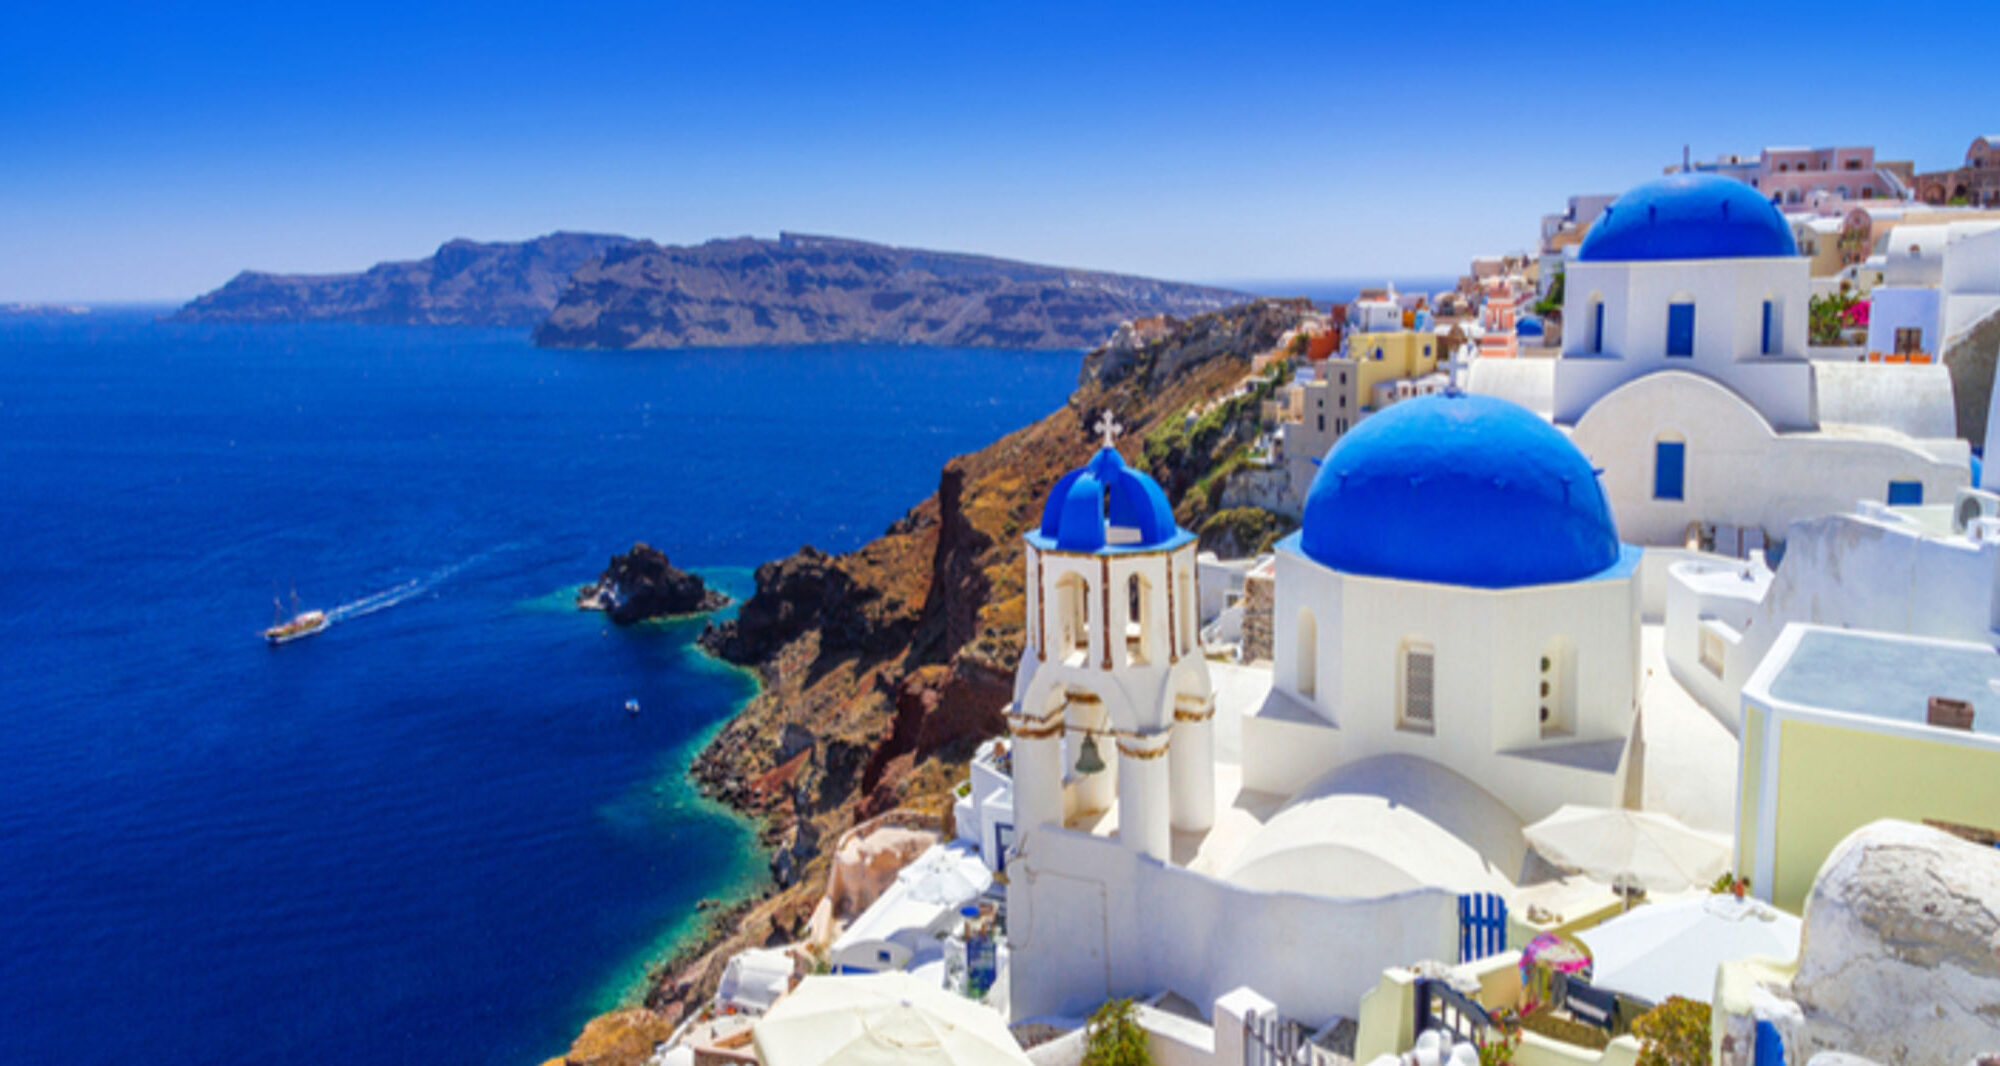 Cruise Griekse eilanden&Italië corendon